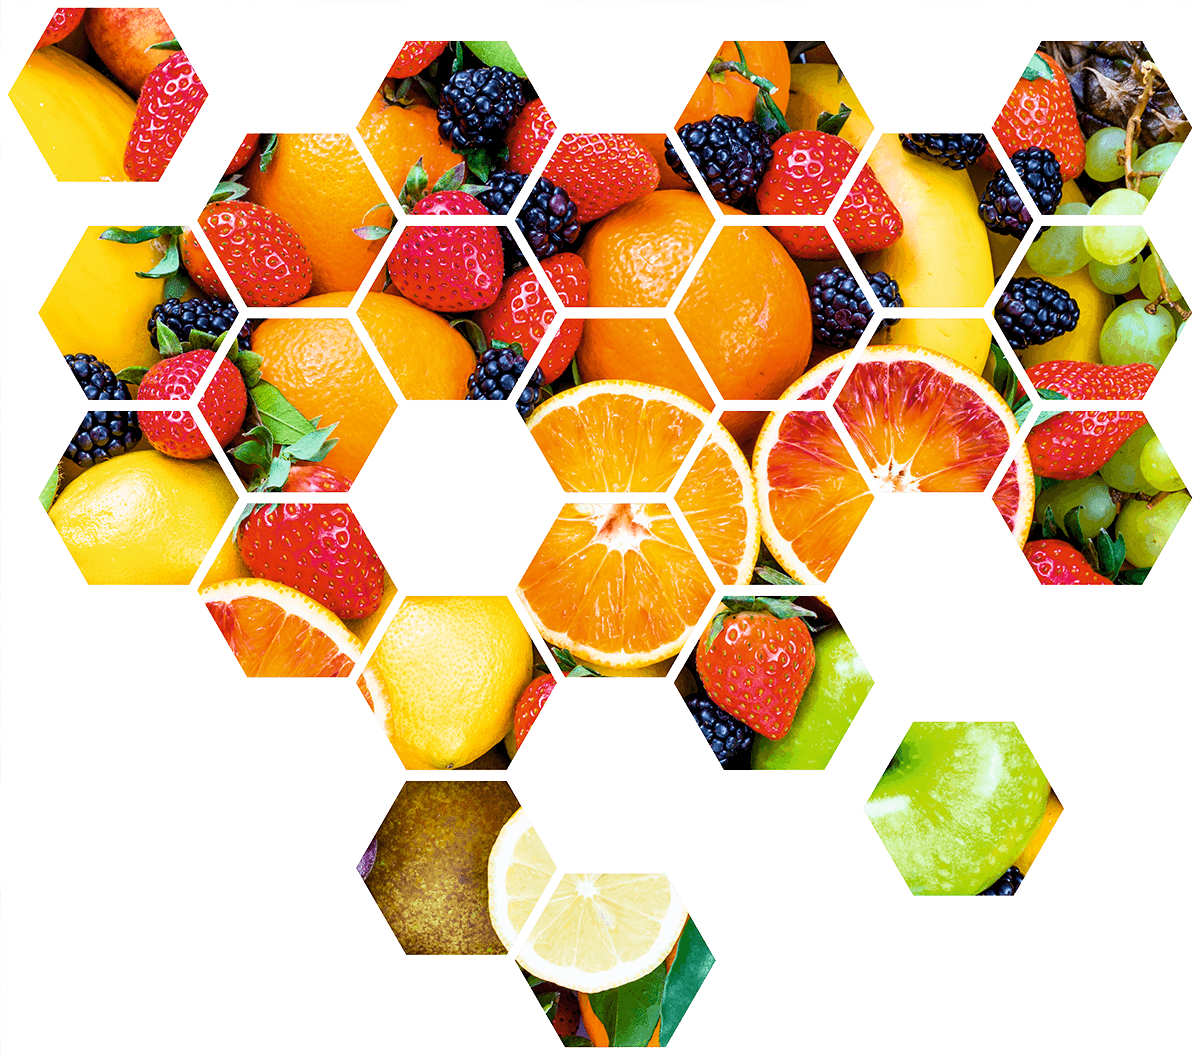 Wall Stickers: Fruit Geometric kit